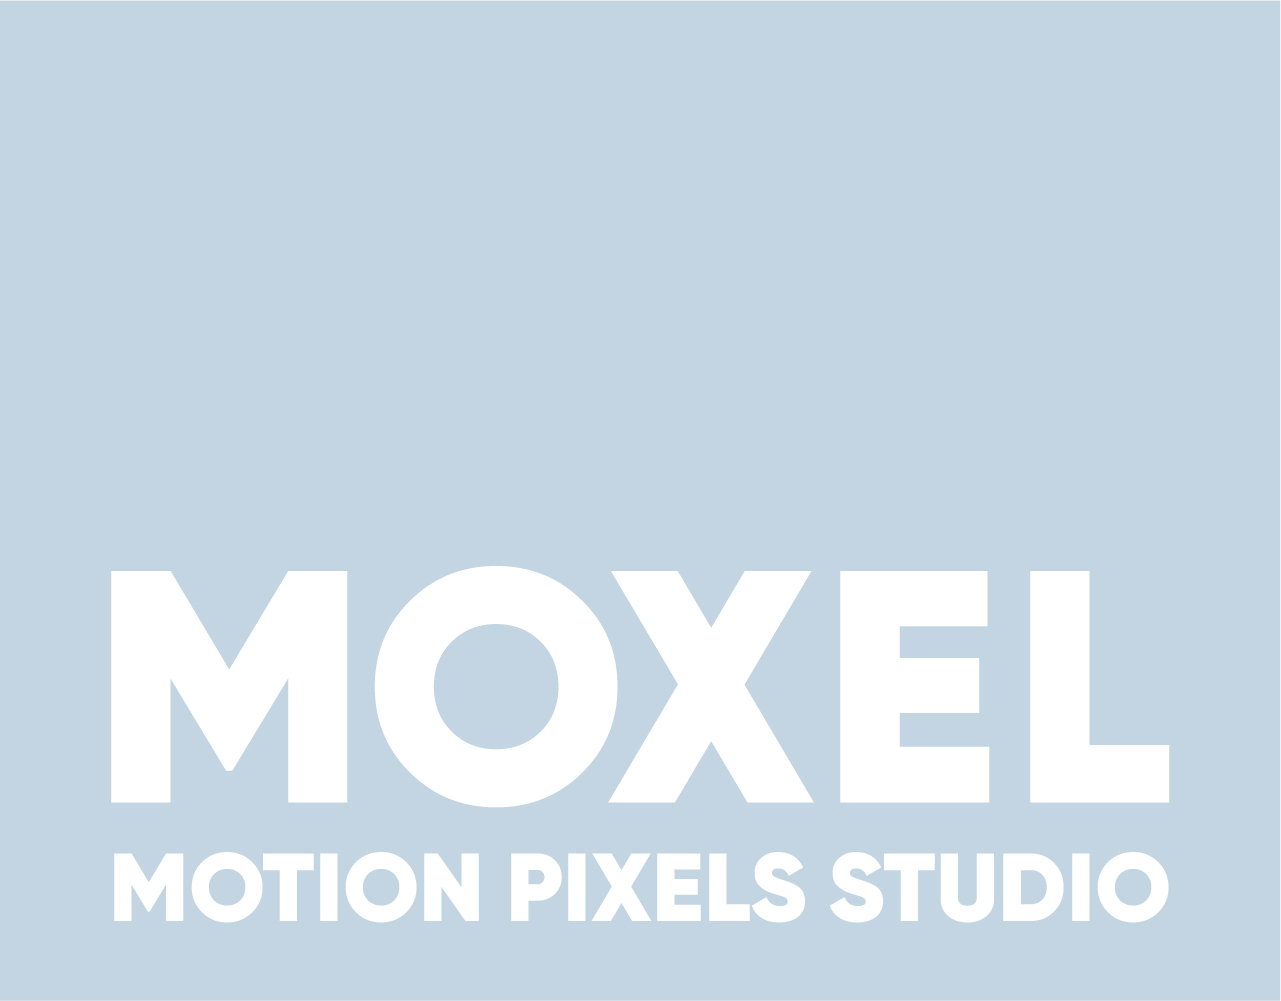 Moxel Motion Pixel Studio Banner